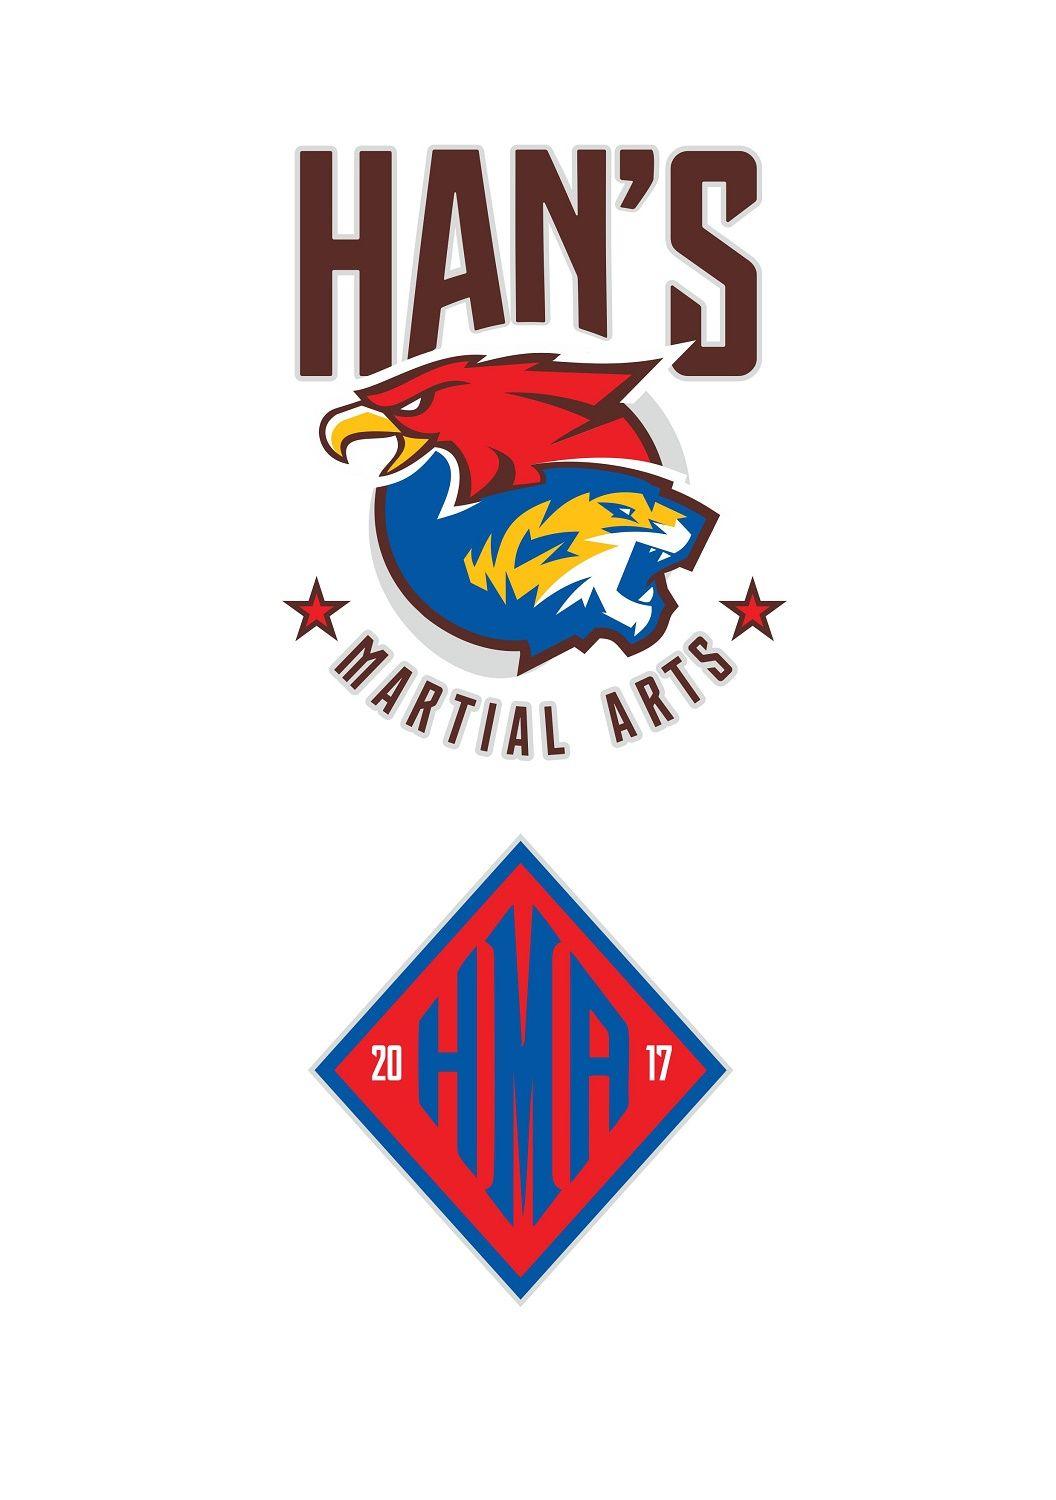 Han Logo - Bold, Colorful, Martial Art Logo Design for Han's Martial Arts by ...